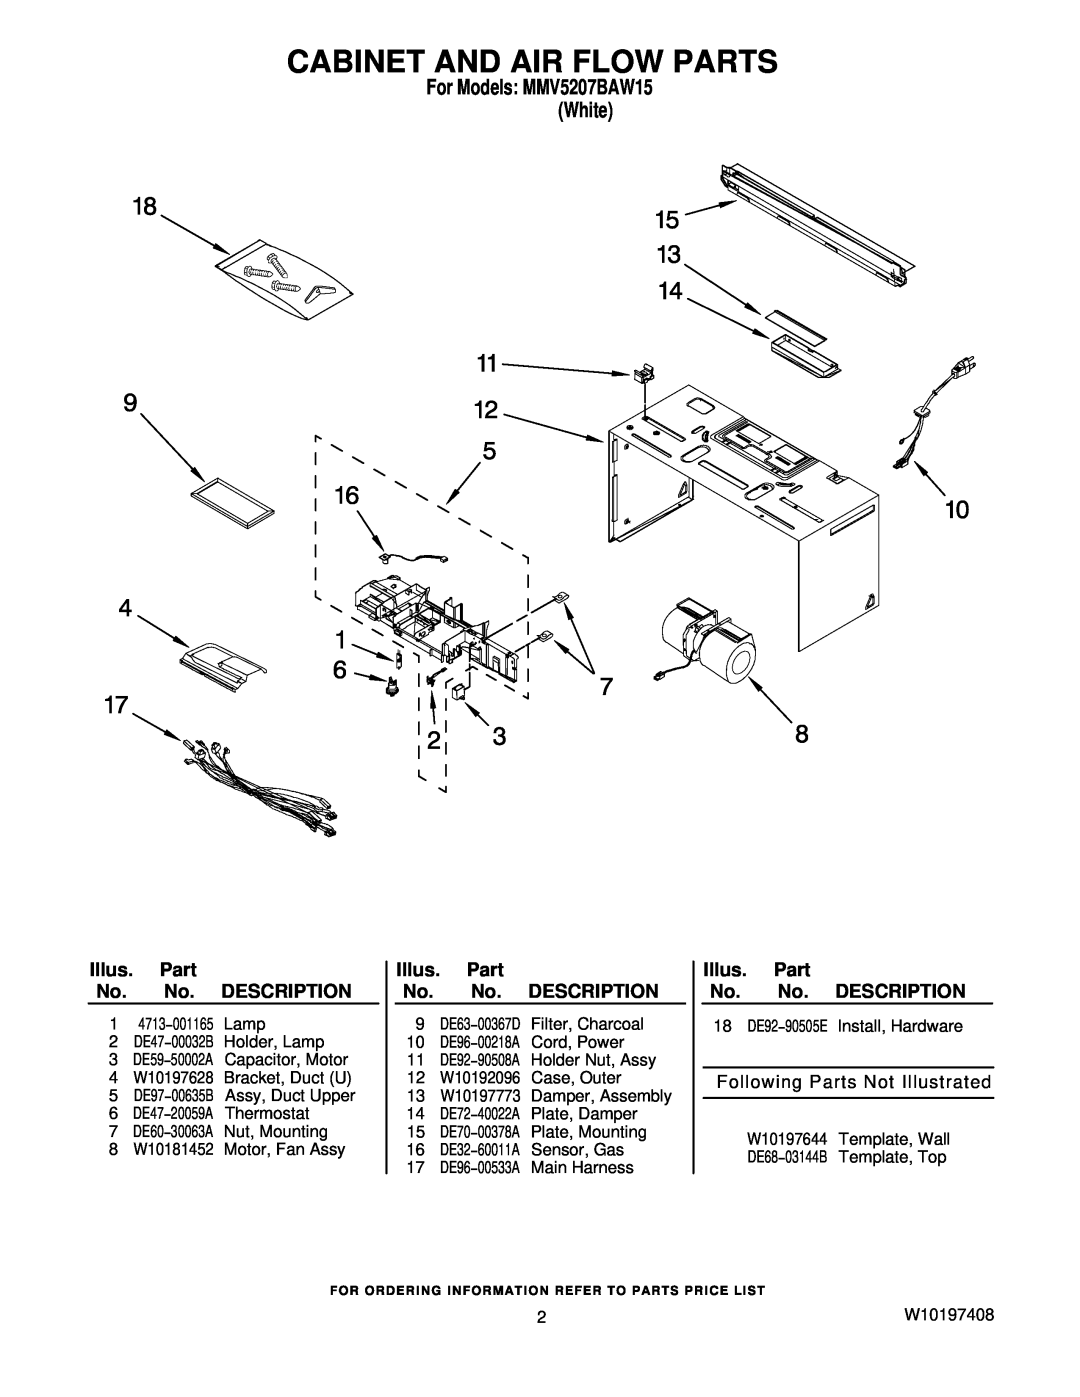 Maytag MMV5207BAW15 manual Cabinet And Air Flow Parts, Description, Illus. Part No. No. DESCRIPTION, Install, Hardware 